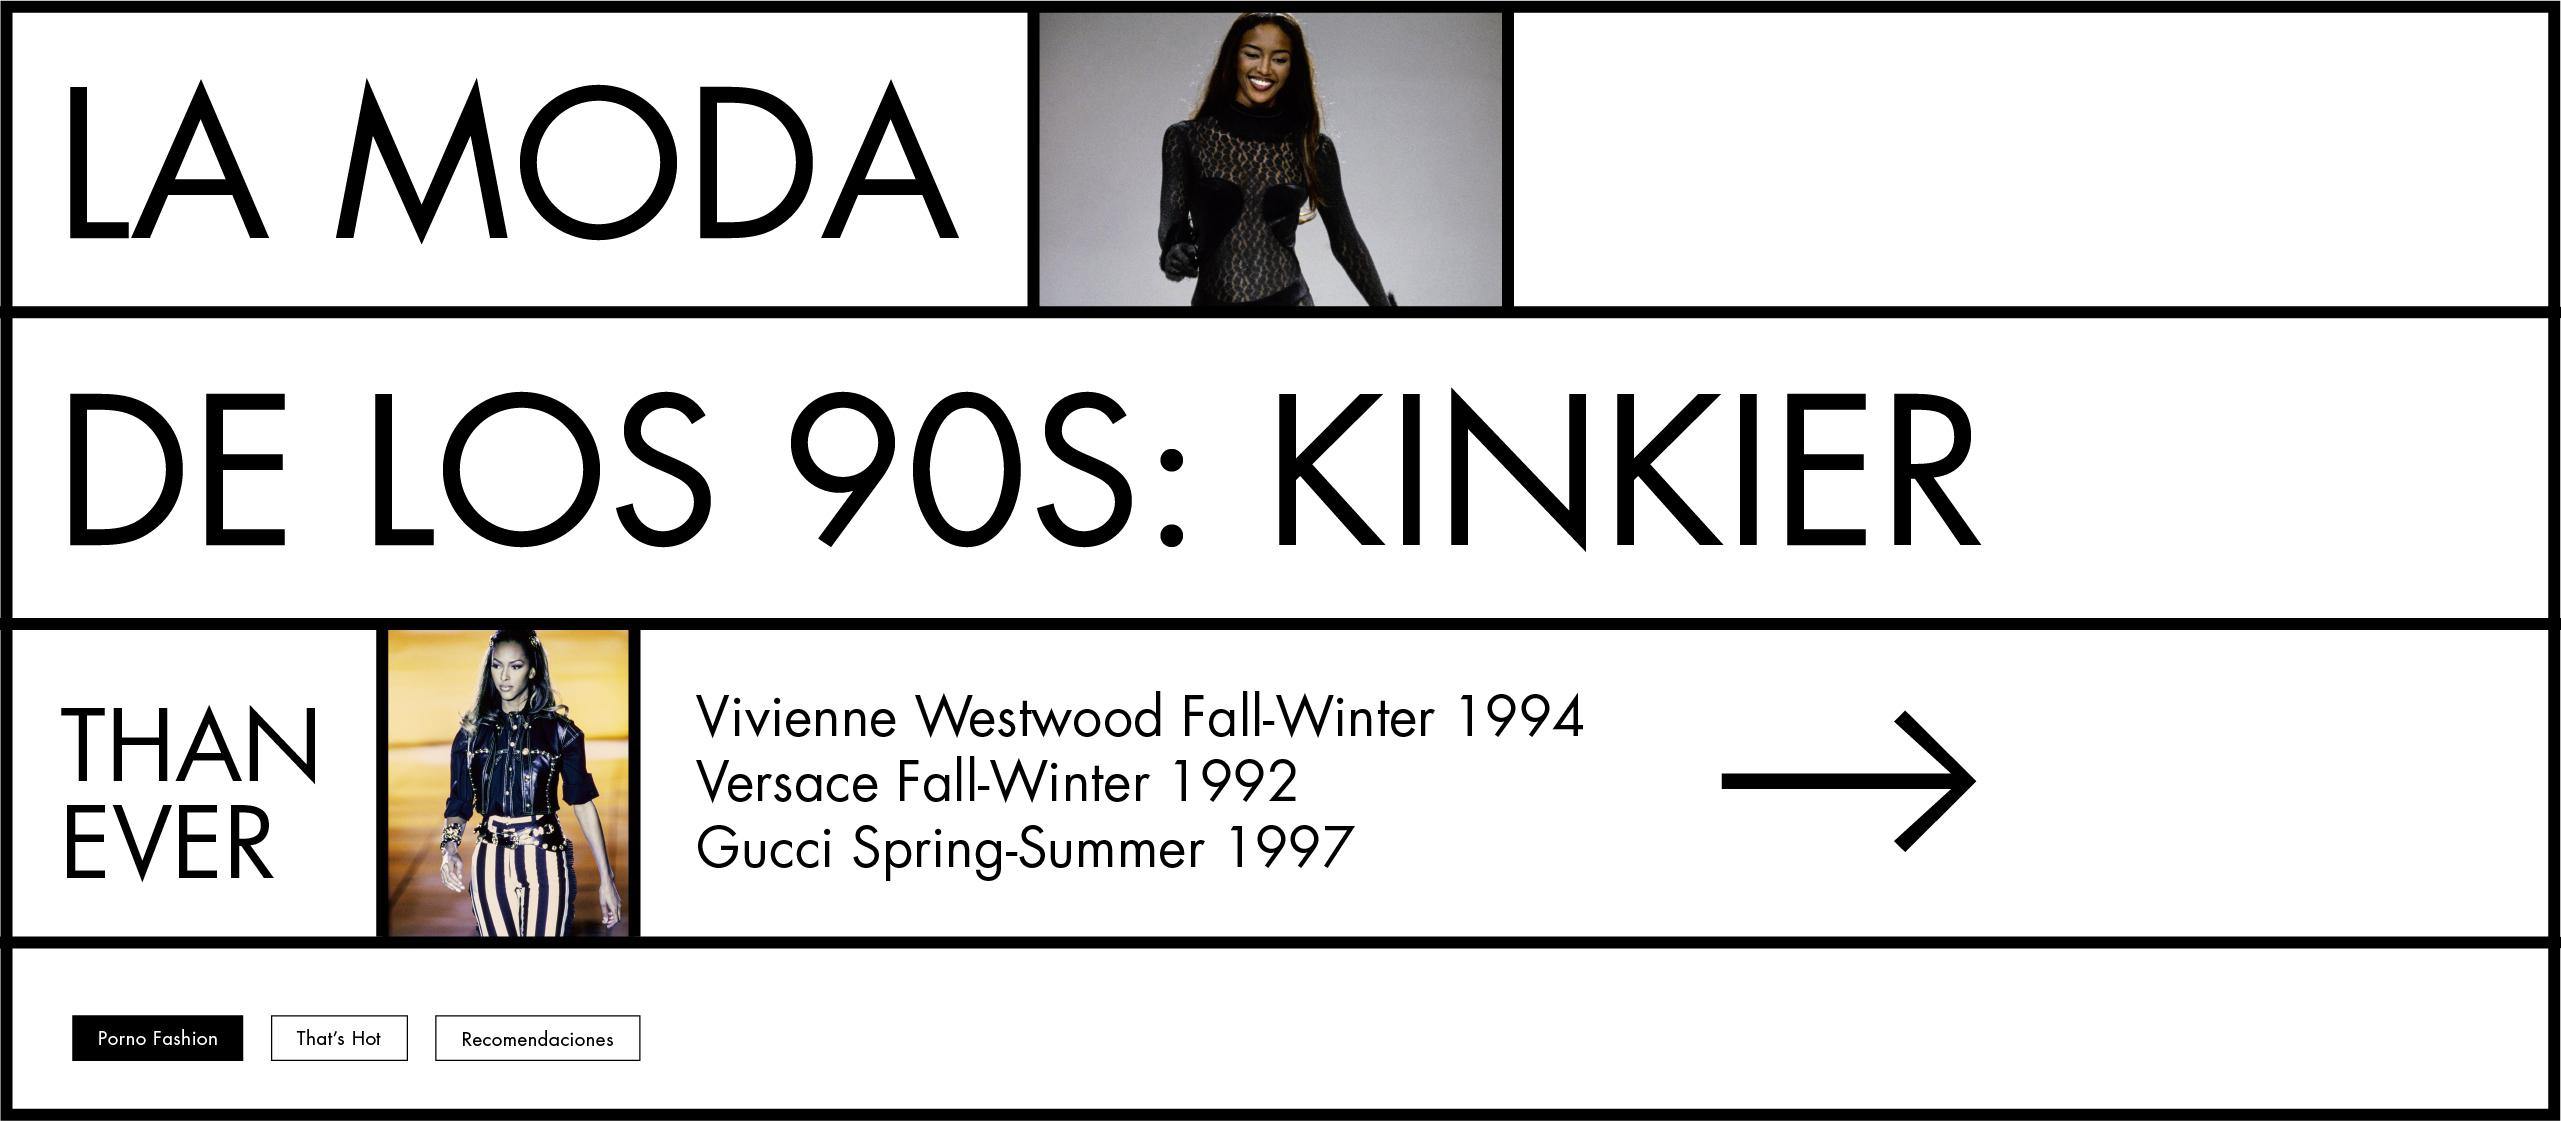 La moda de los 90’s: Kinkier than ever